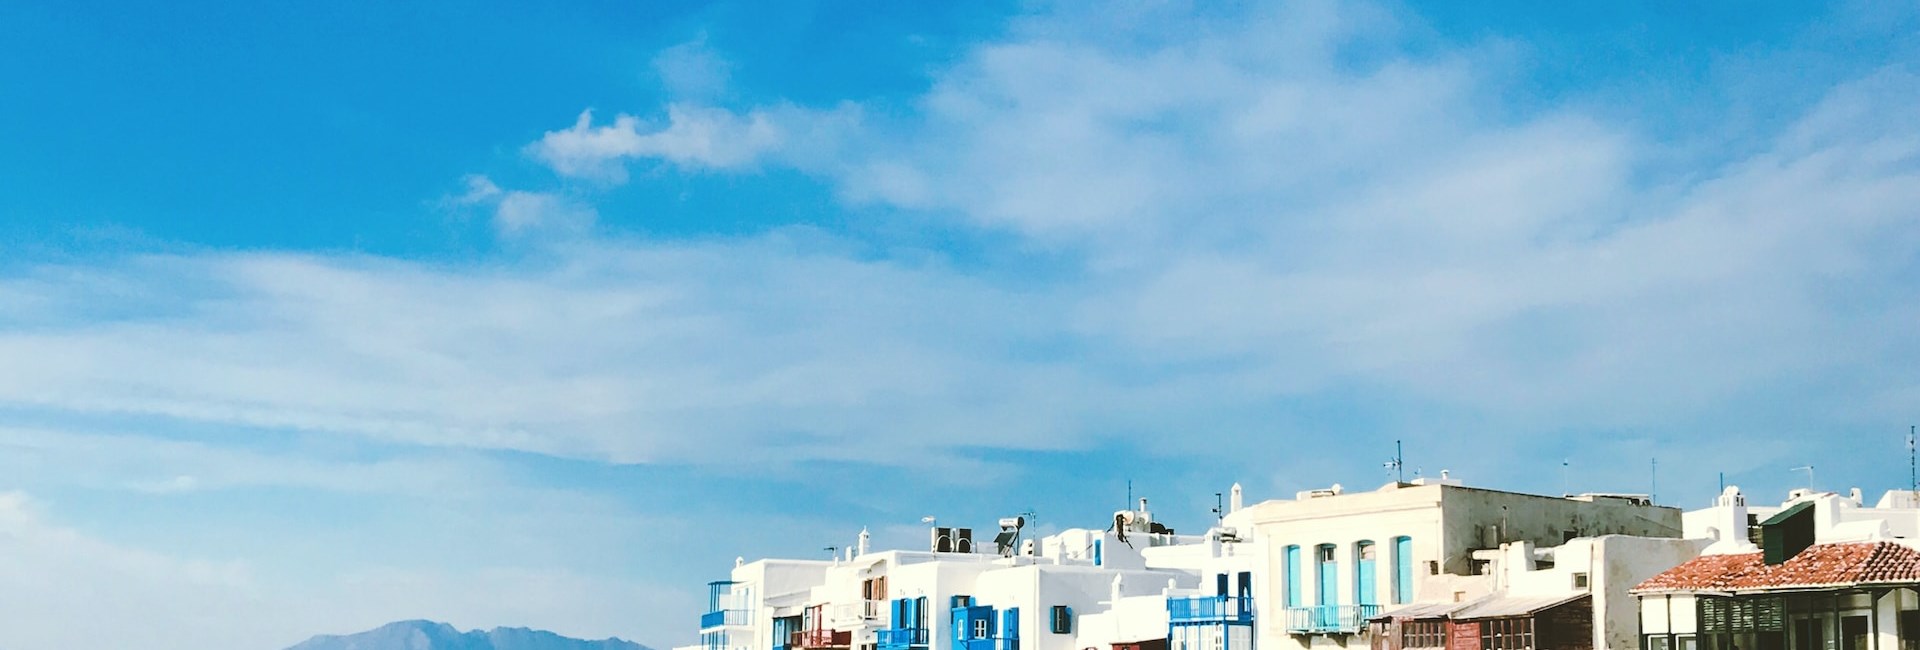 white buildings of Mykonos across blue sea under cobalt sky